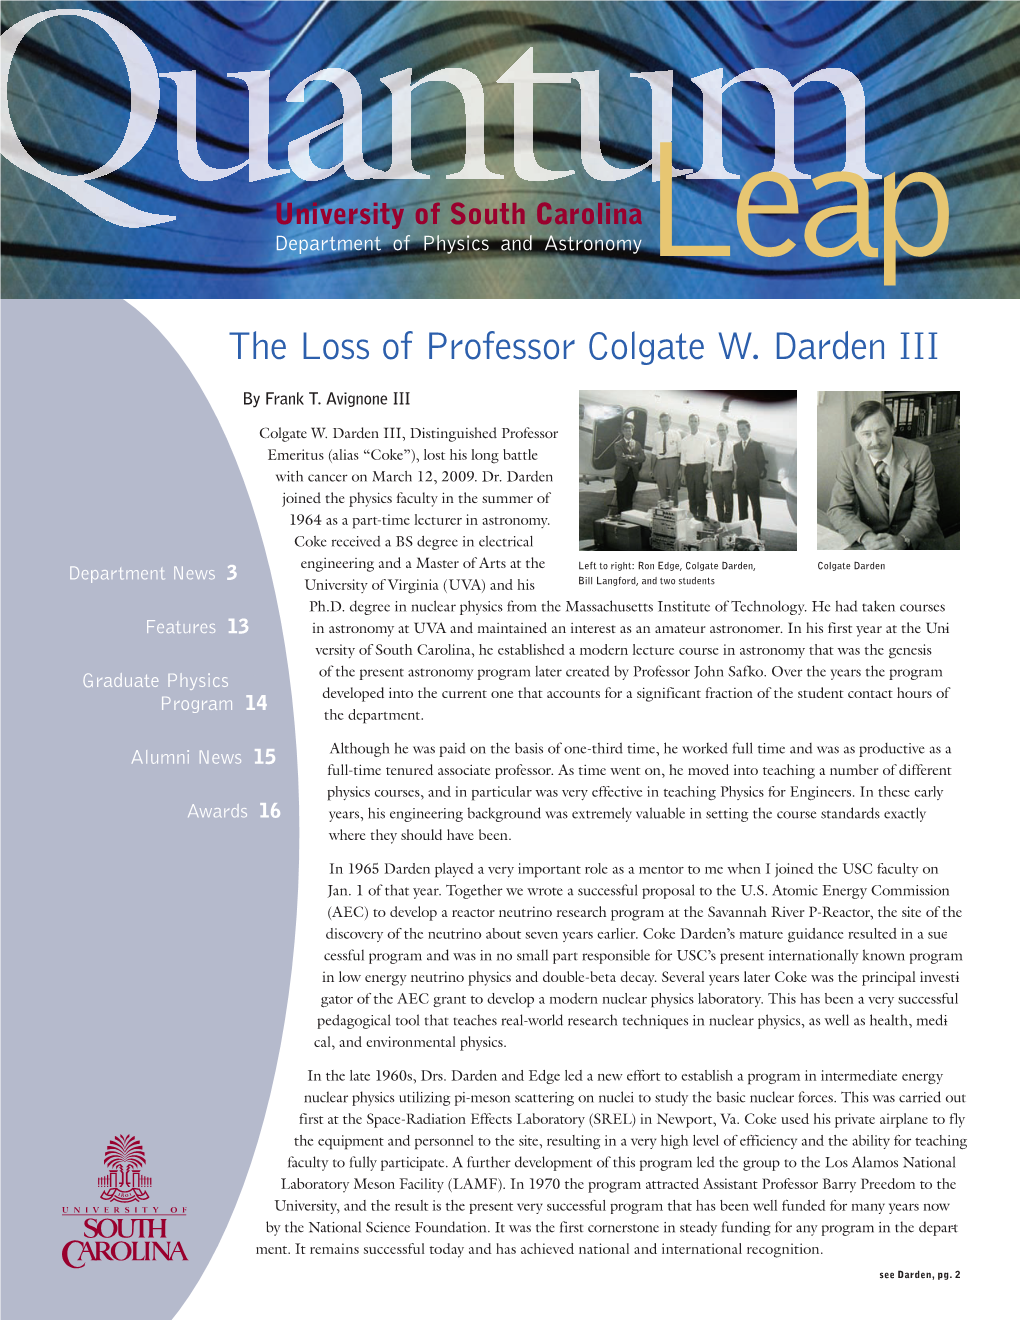 The Loss of Professor Colgate W. Darden III